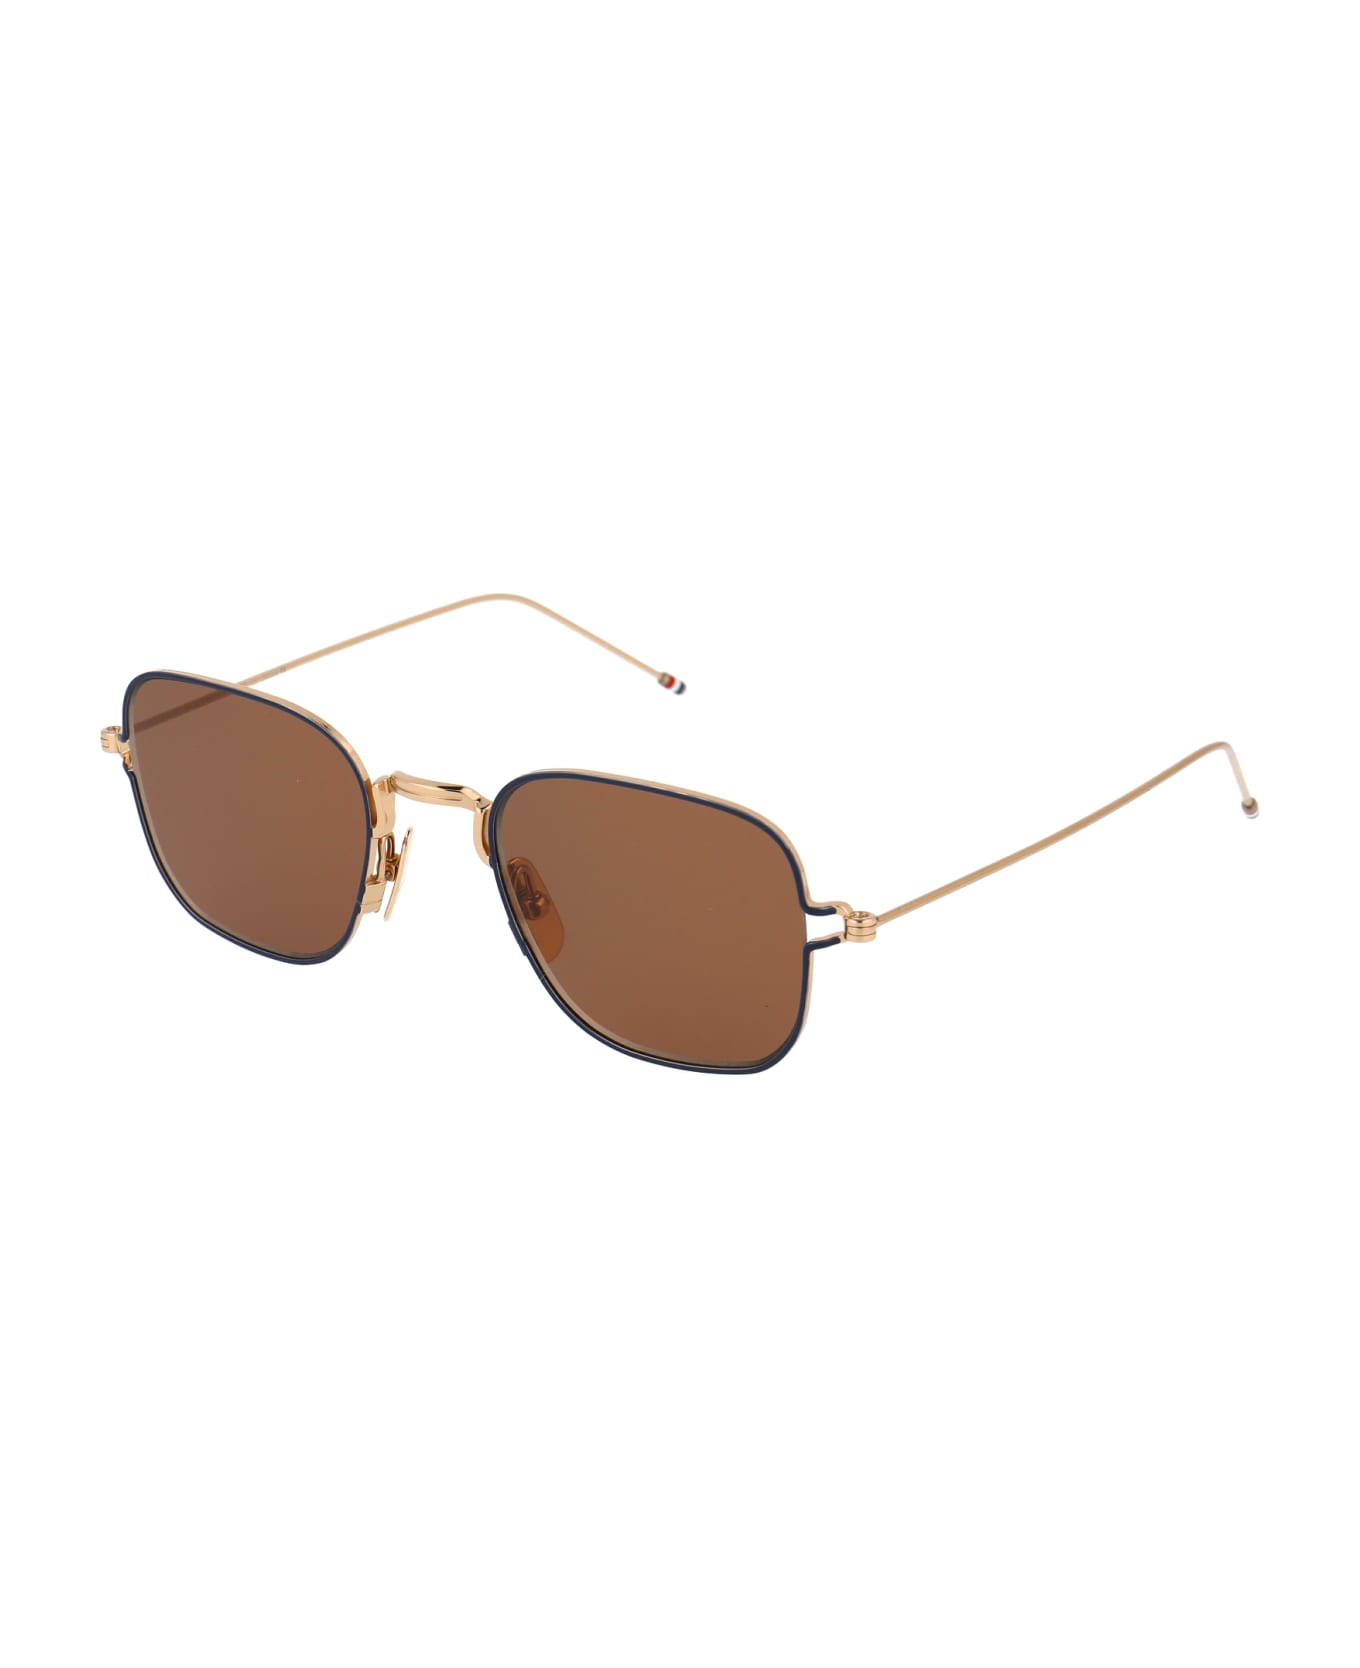 Thom Browne Tb-116 Sunglasses - WHITE GOLD - NAVY W/ DARK BROWN サングラス